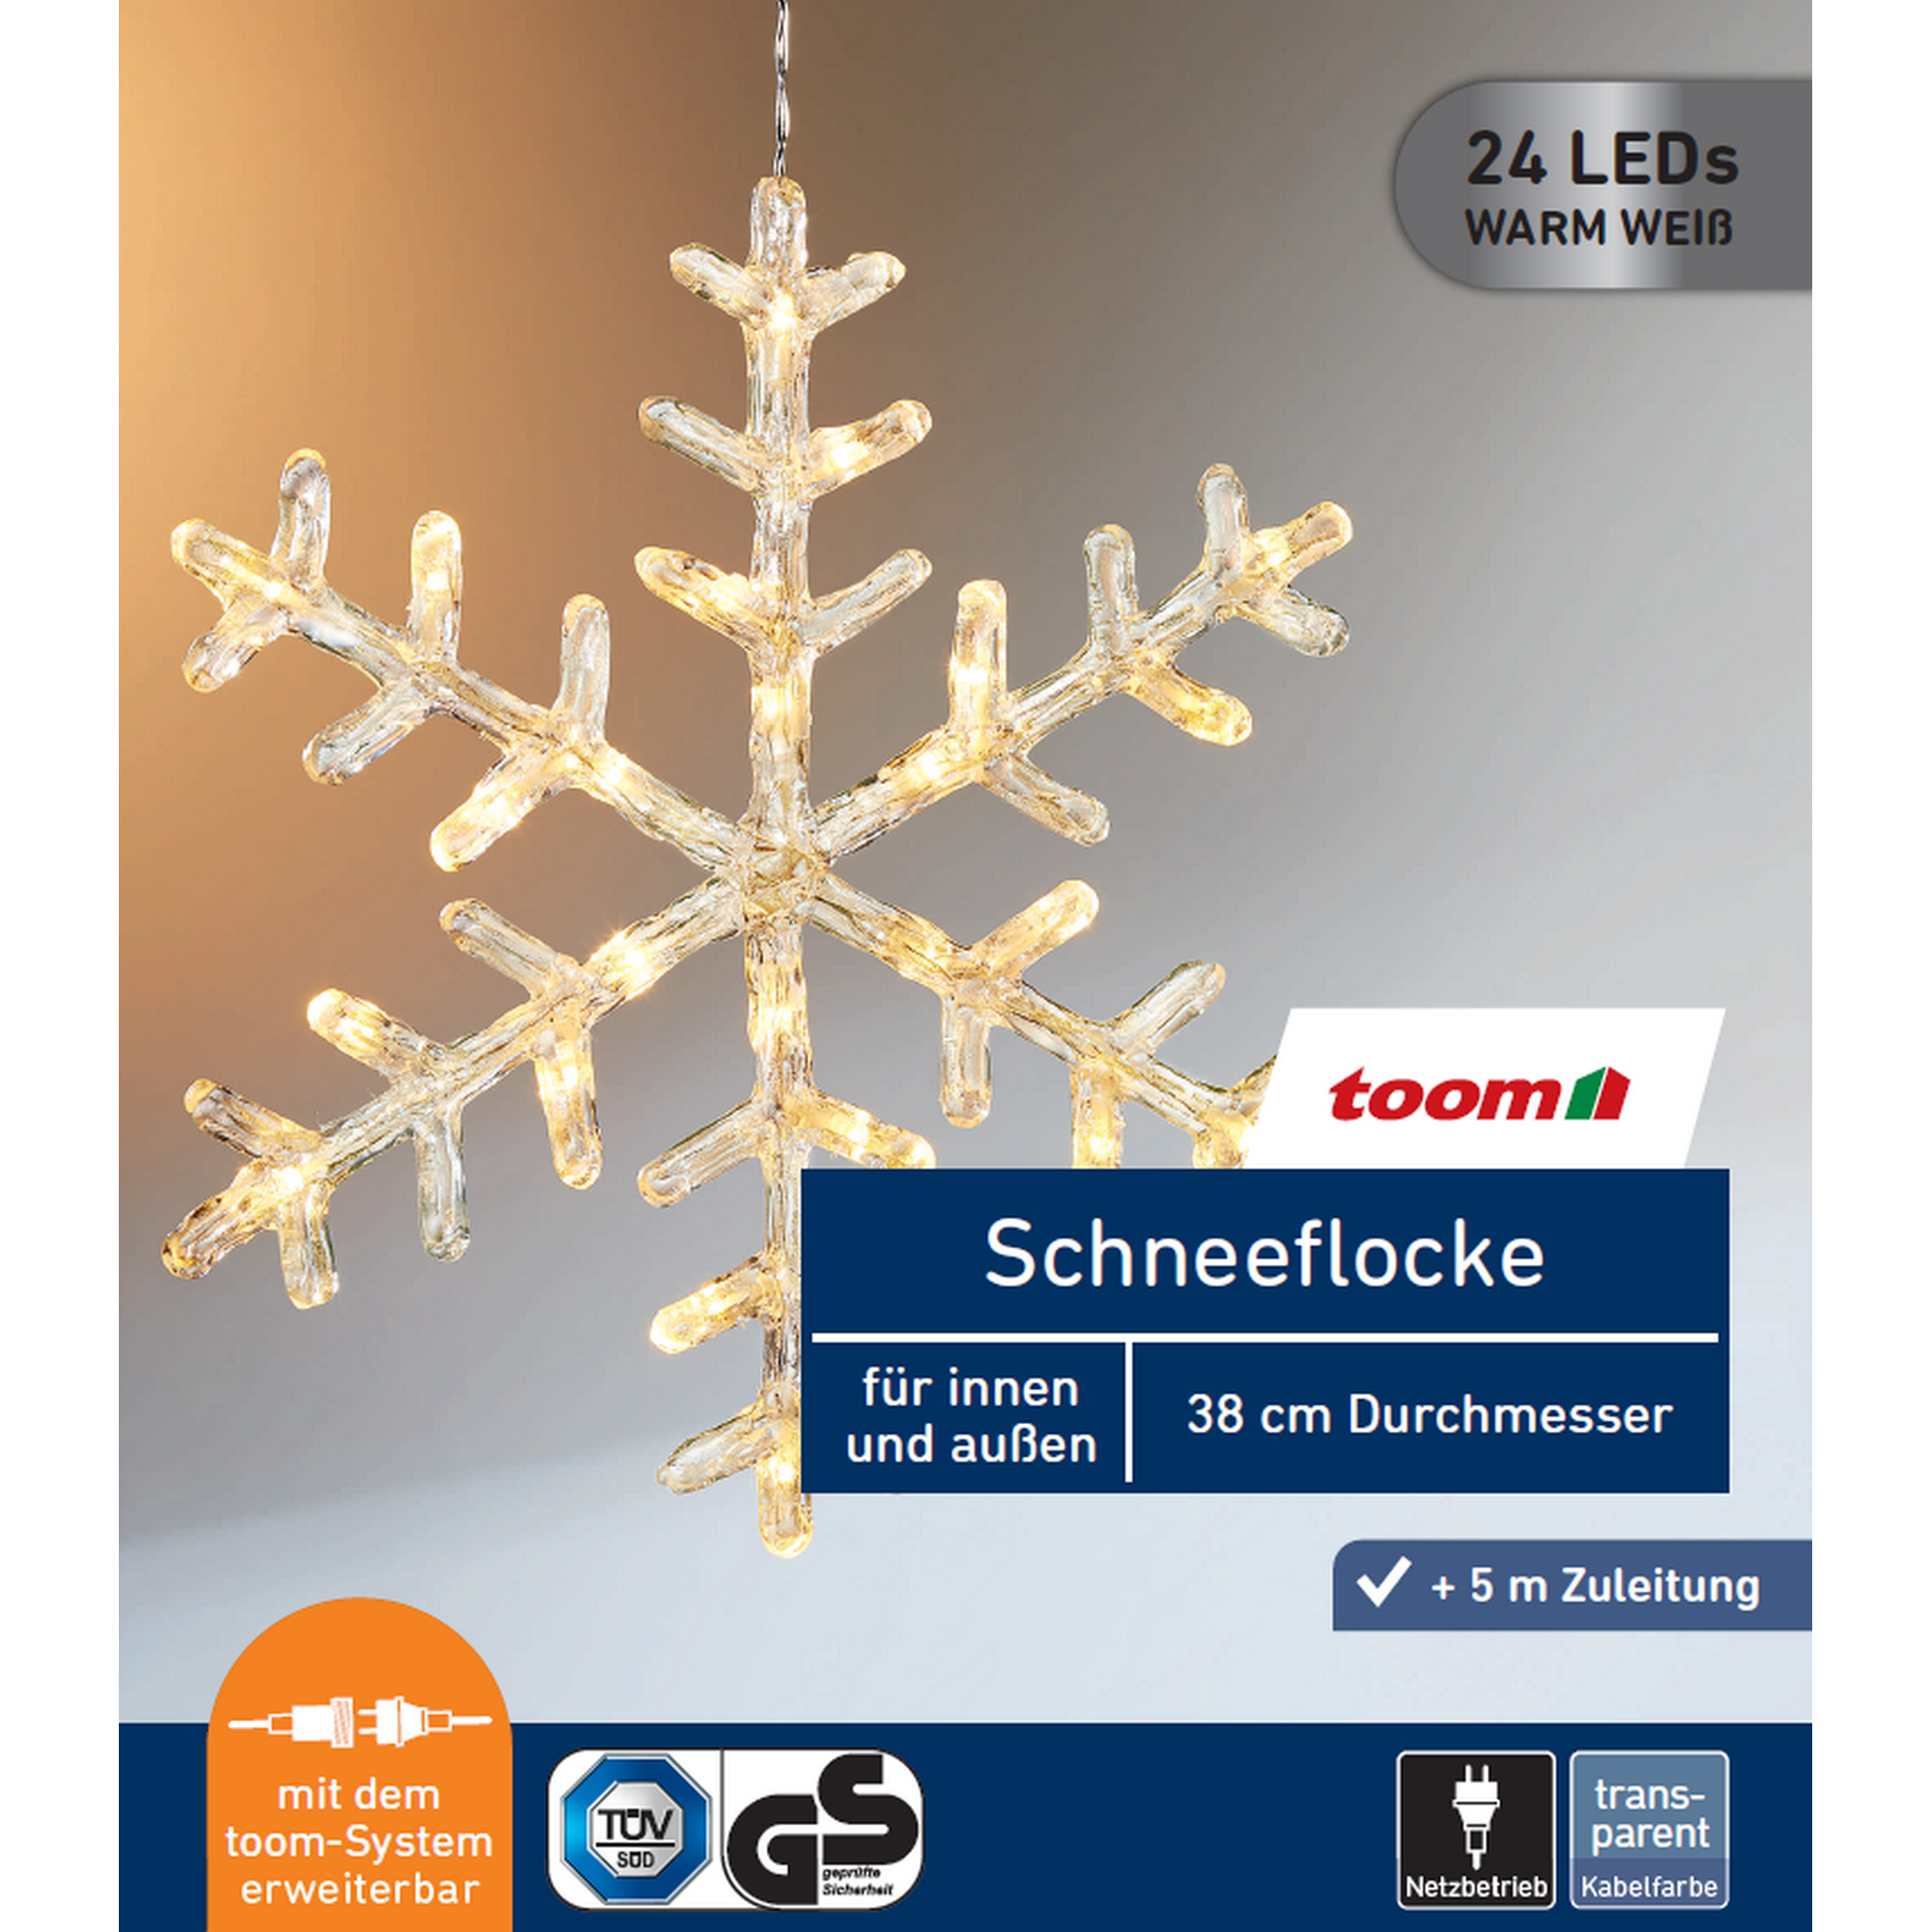 LED-Schneeflocke 24 LEDs warmweiß Ø 38 cm + product picture